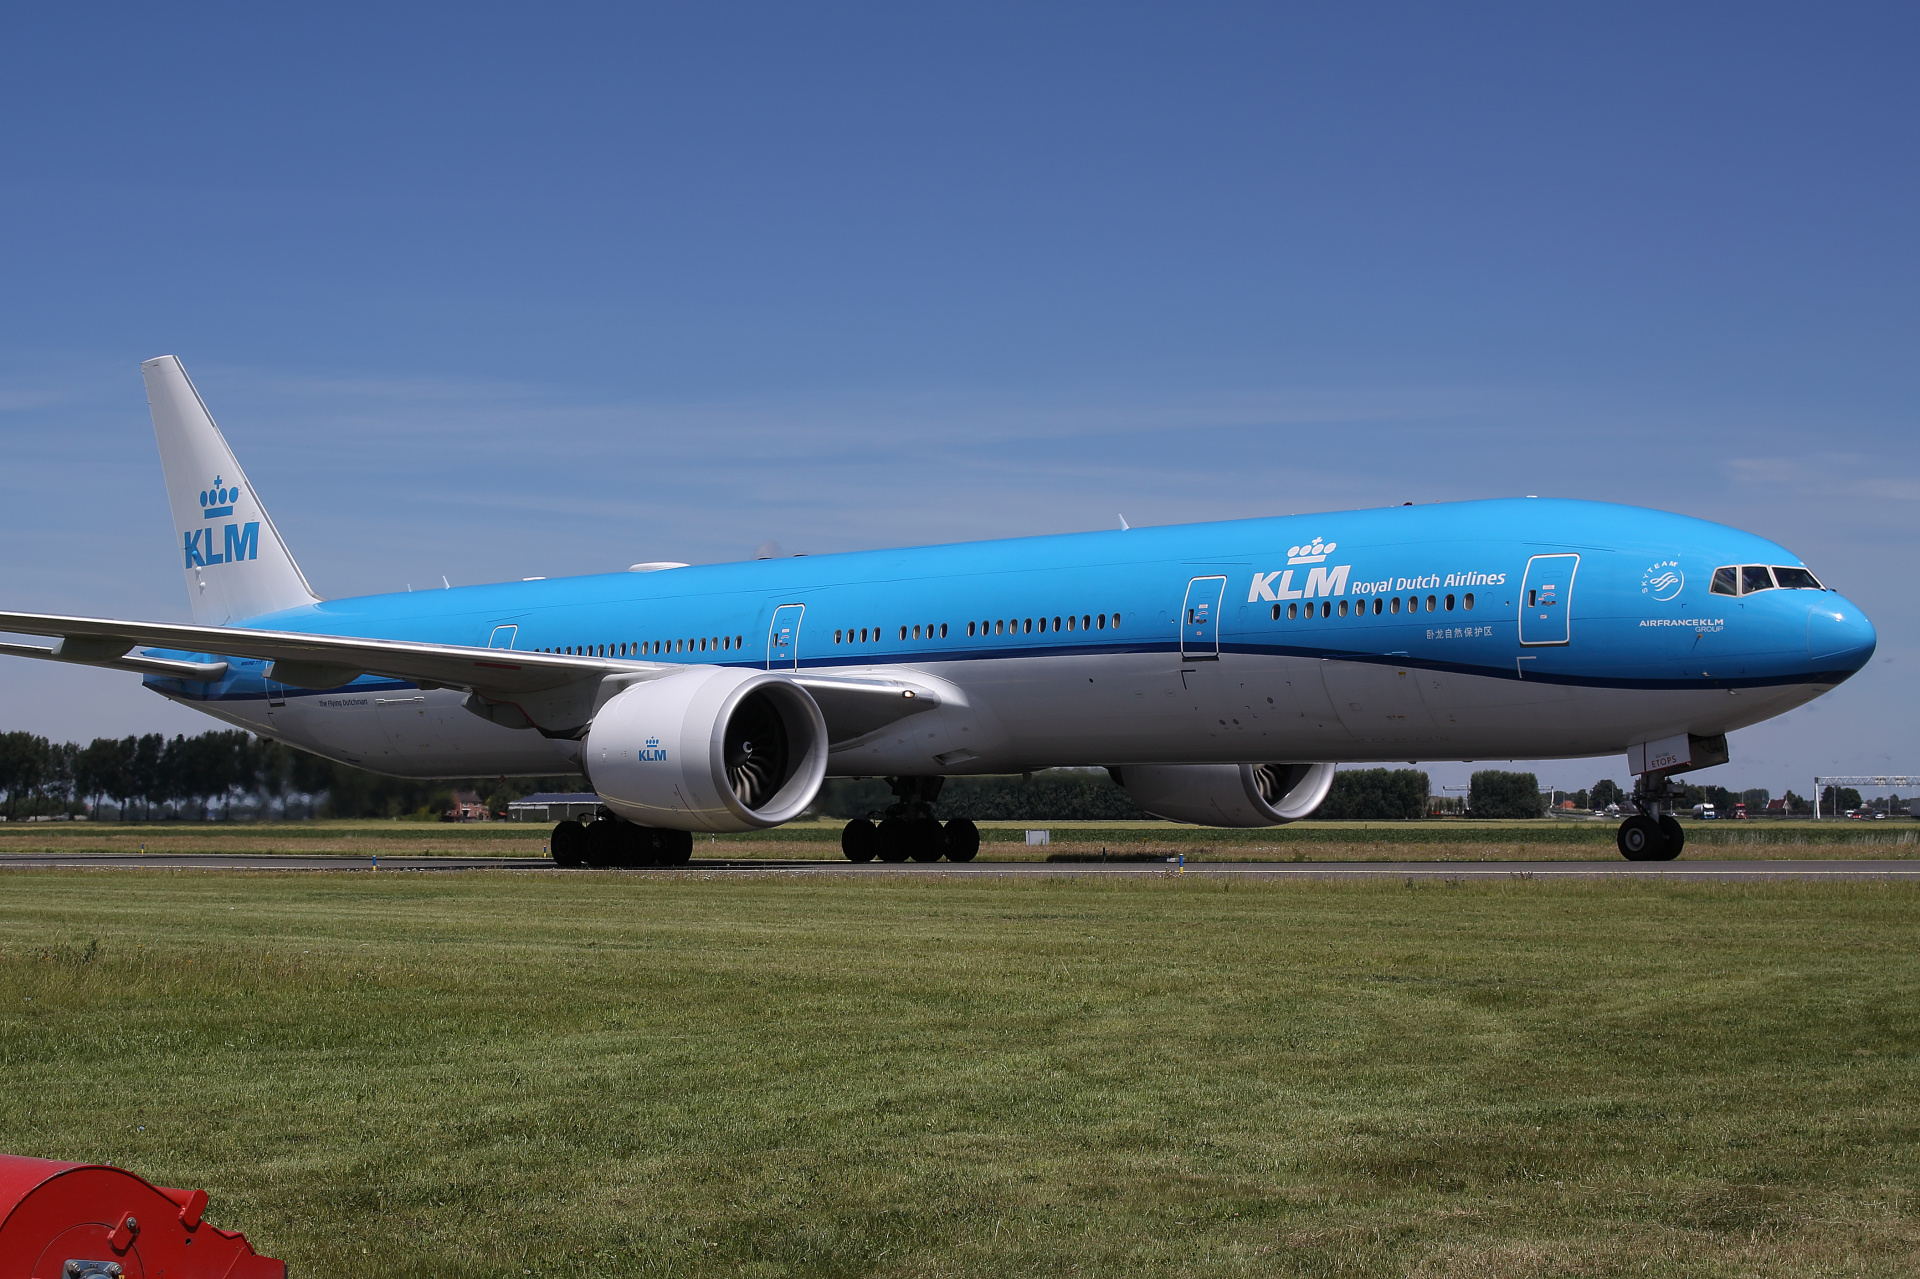 PH-BVG (Aircraft » Schiphol Spotting » Boeing 777-300ER » KLM Royal Dutch Airlines)